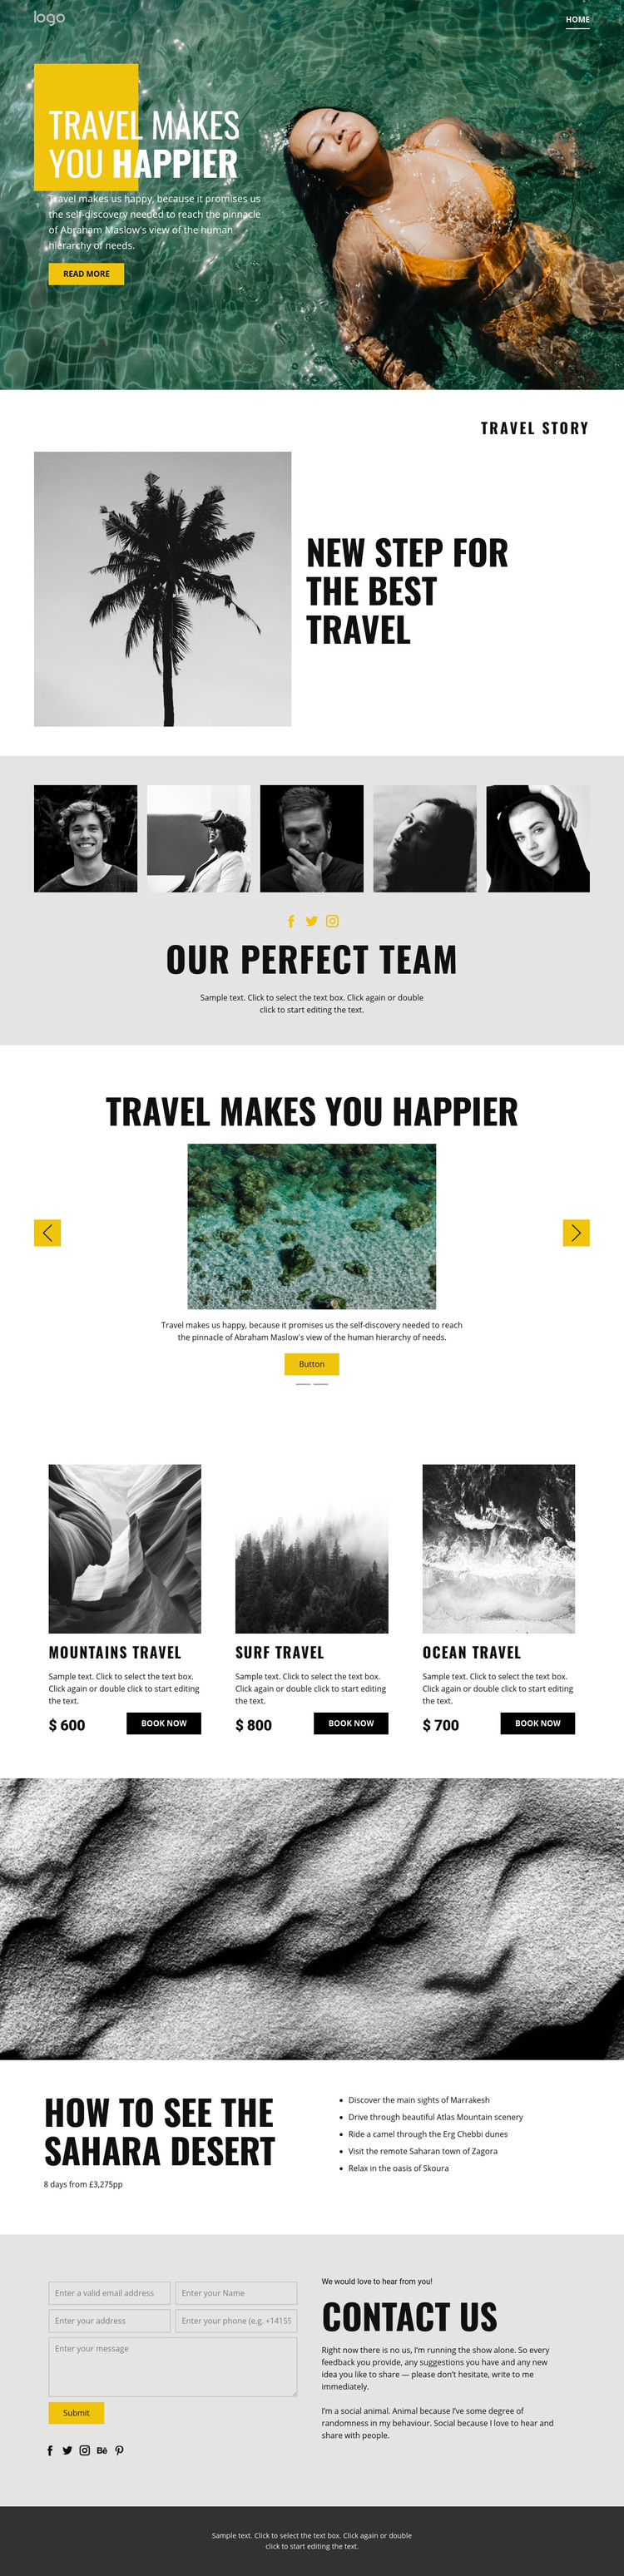 Happy people deserve travel Homepage Design